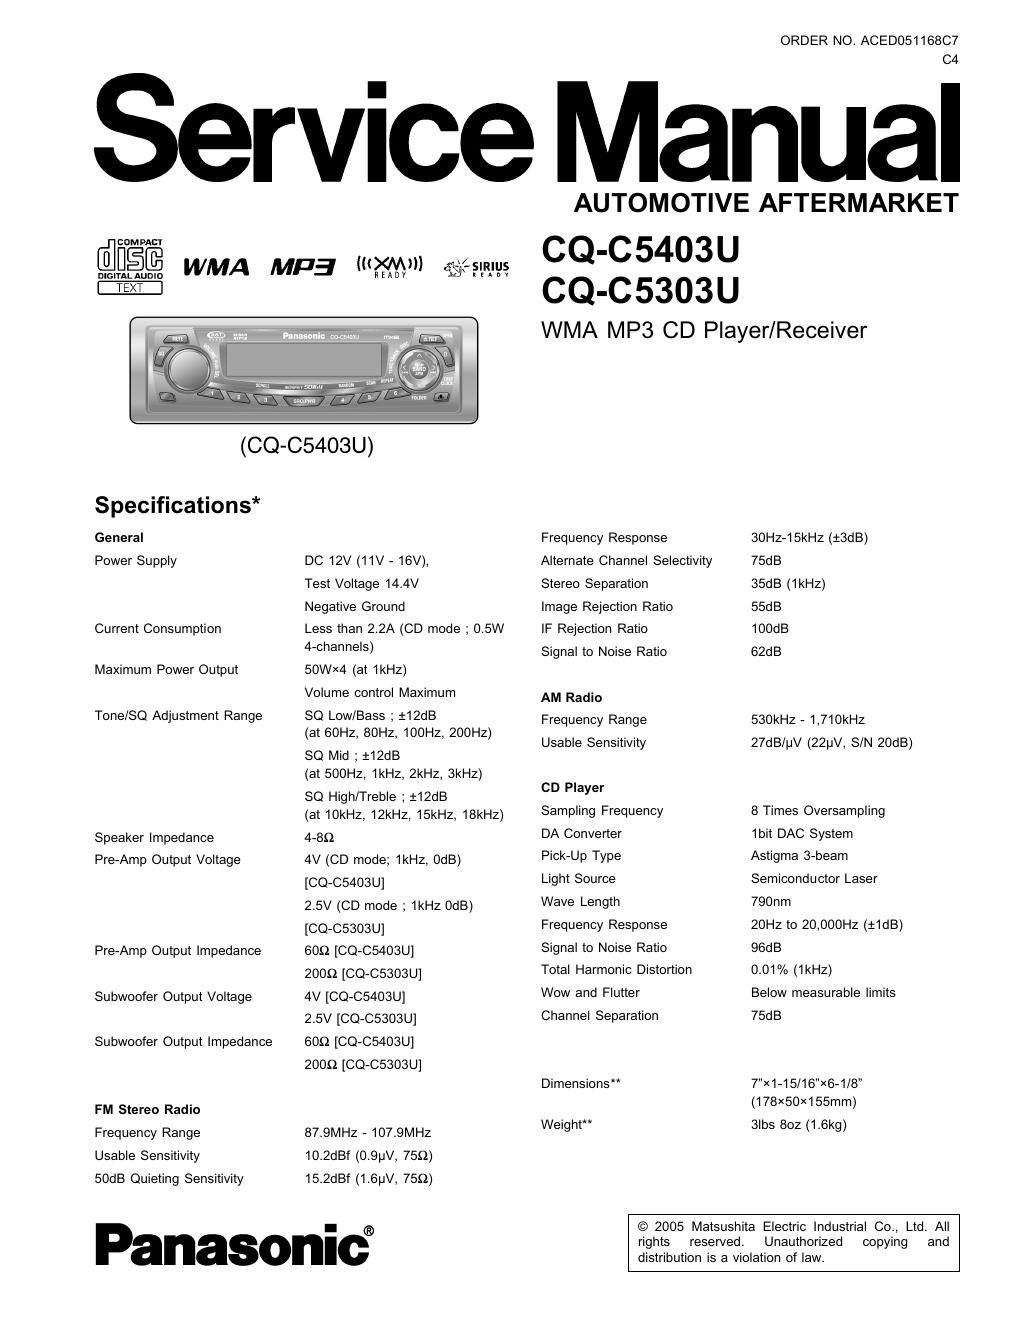 panasonic cq c 5403 u service manual